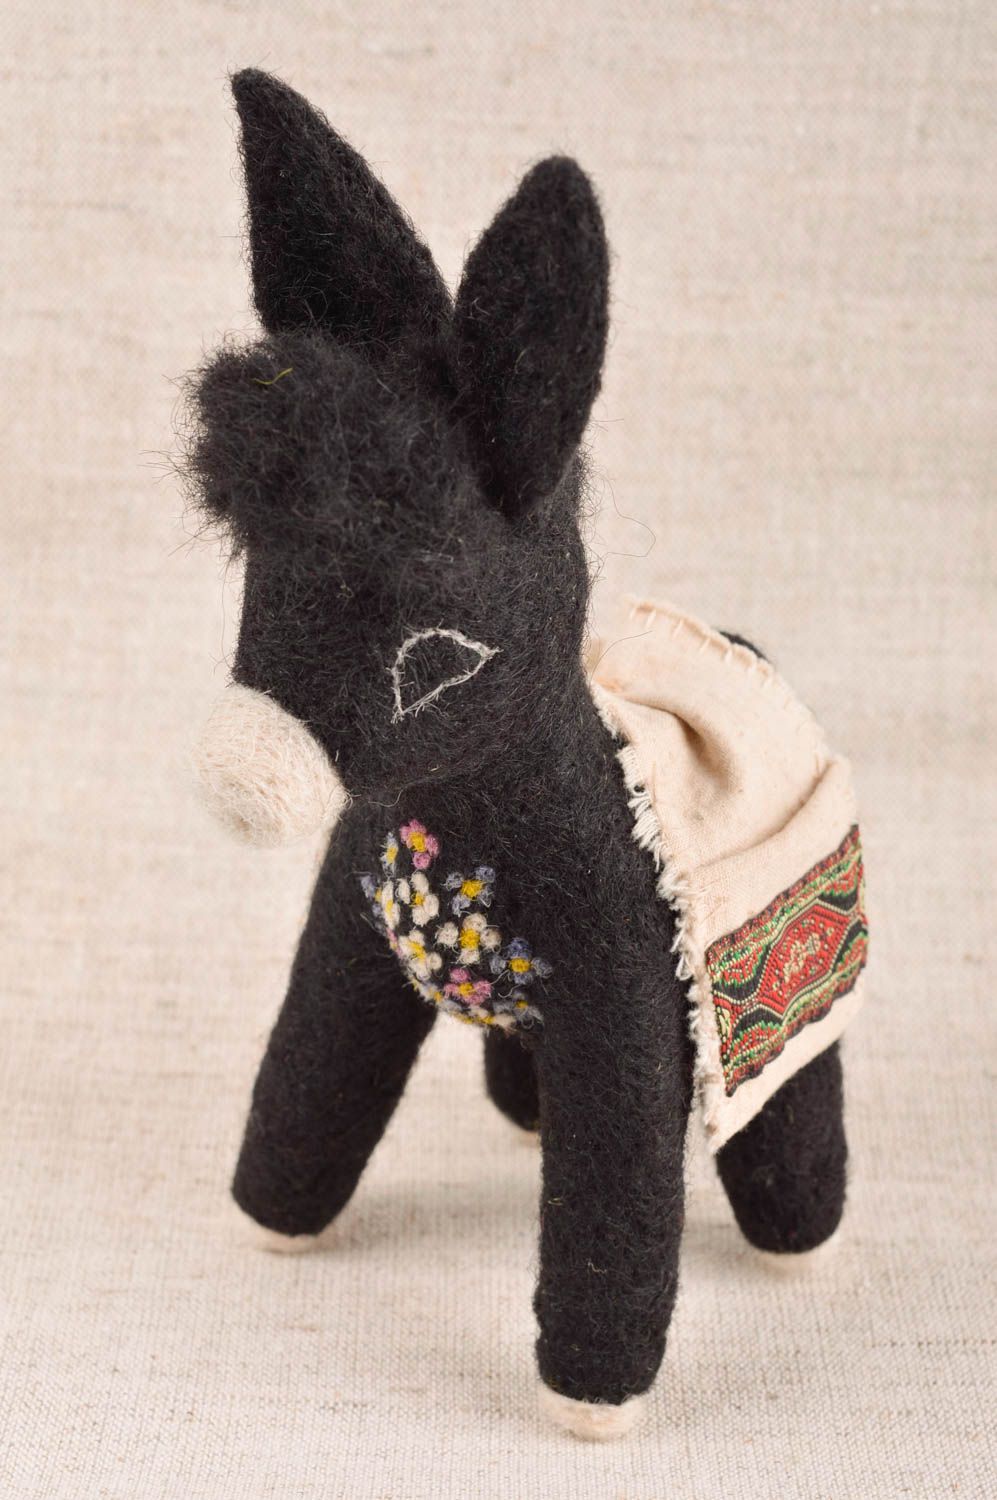 Kawaii Long Ear Donkey Plush Keychain 17*14cm